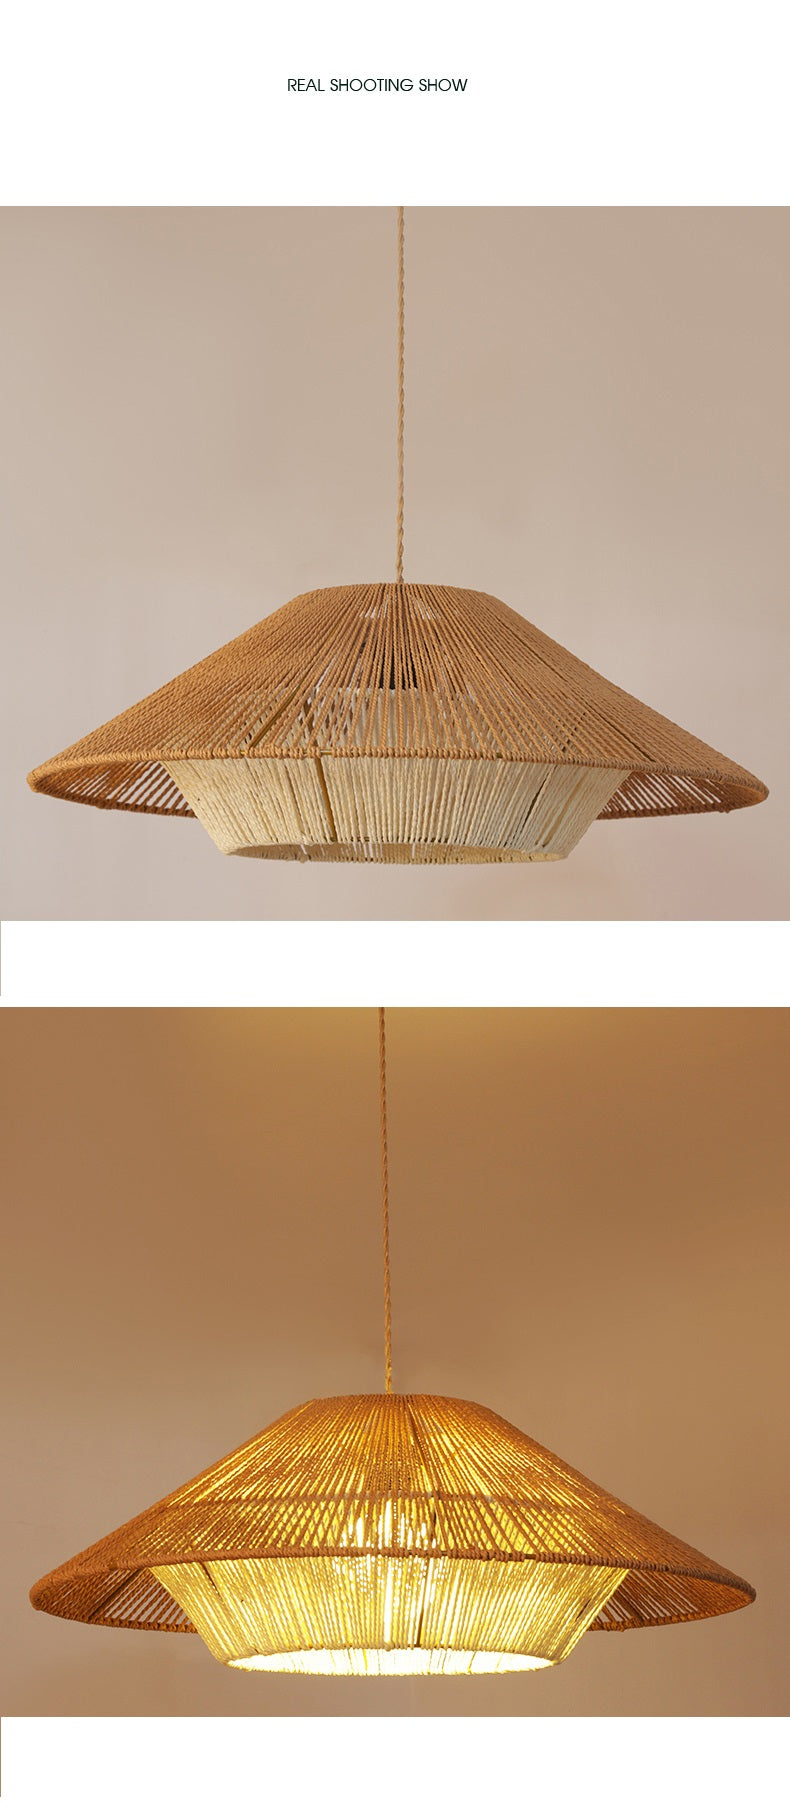 Vintage Rope Chandelier - Hemp Rope Pendant Lamp - Hand Woven Hanging Light arclightsdesign